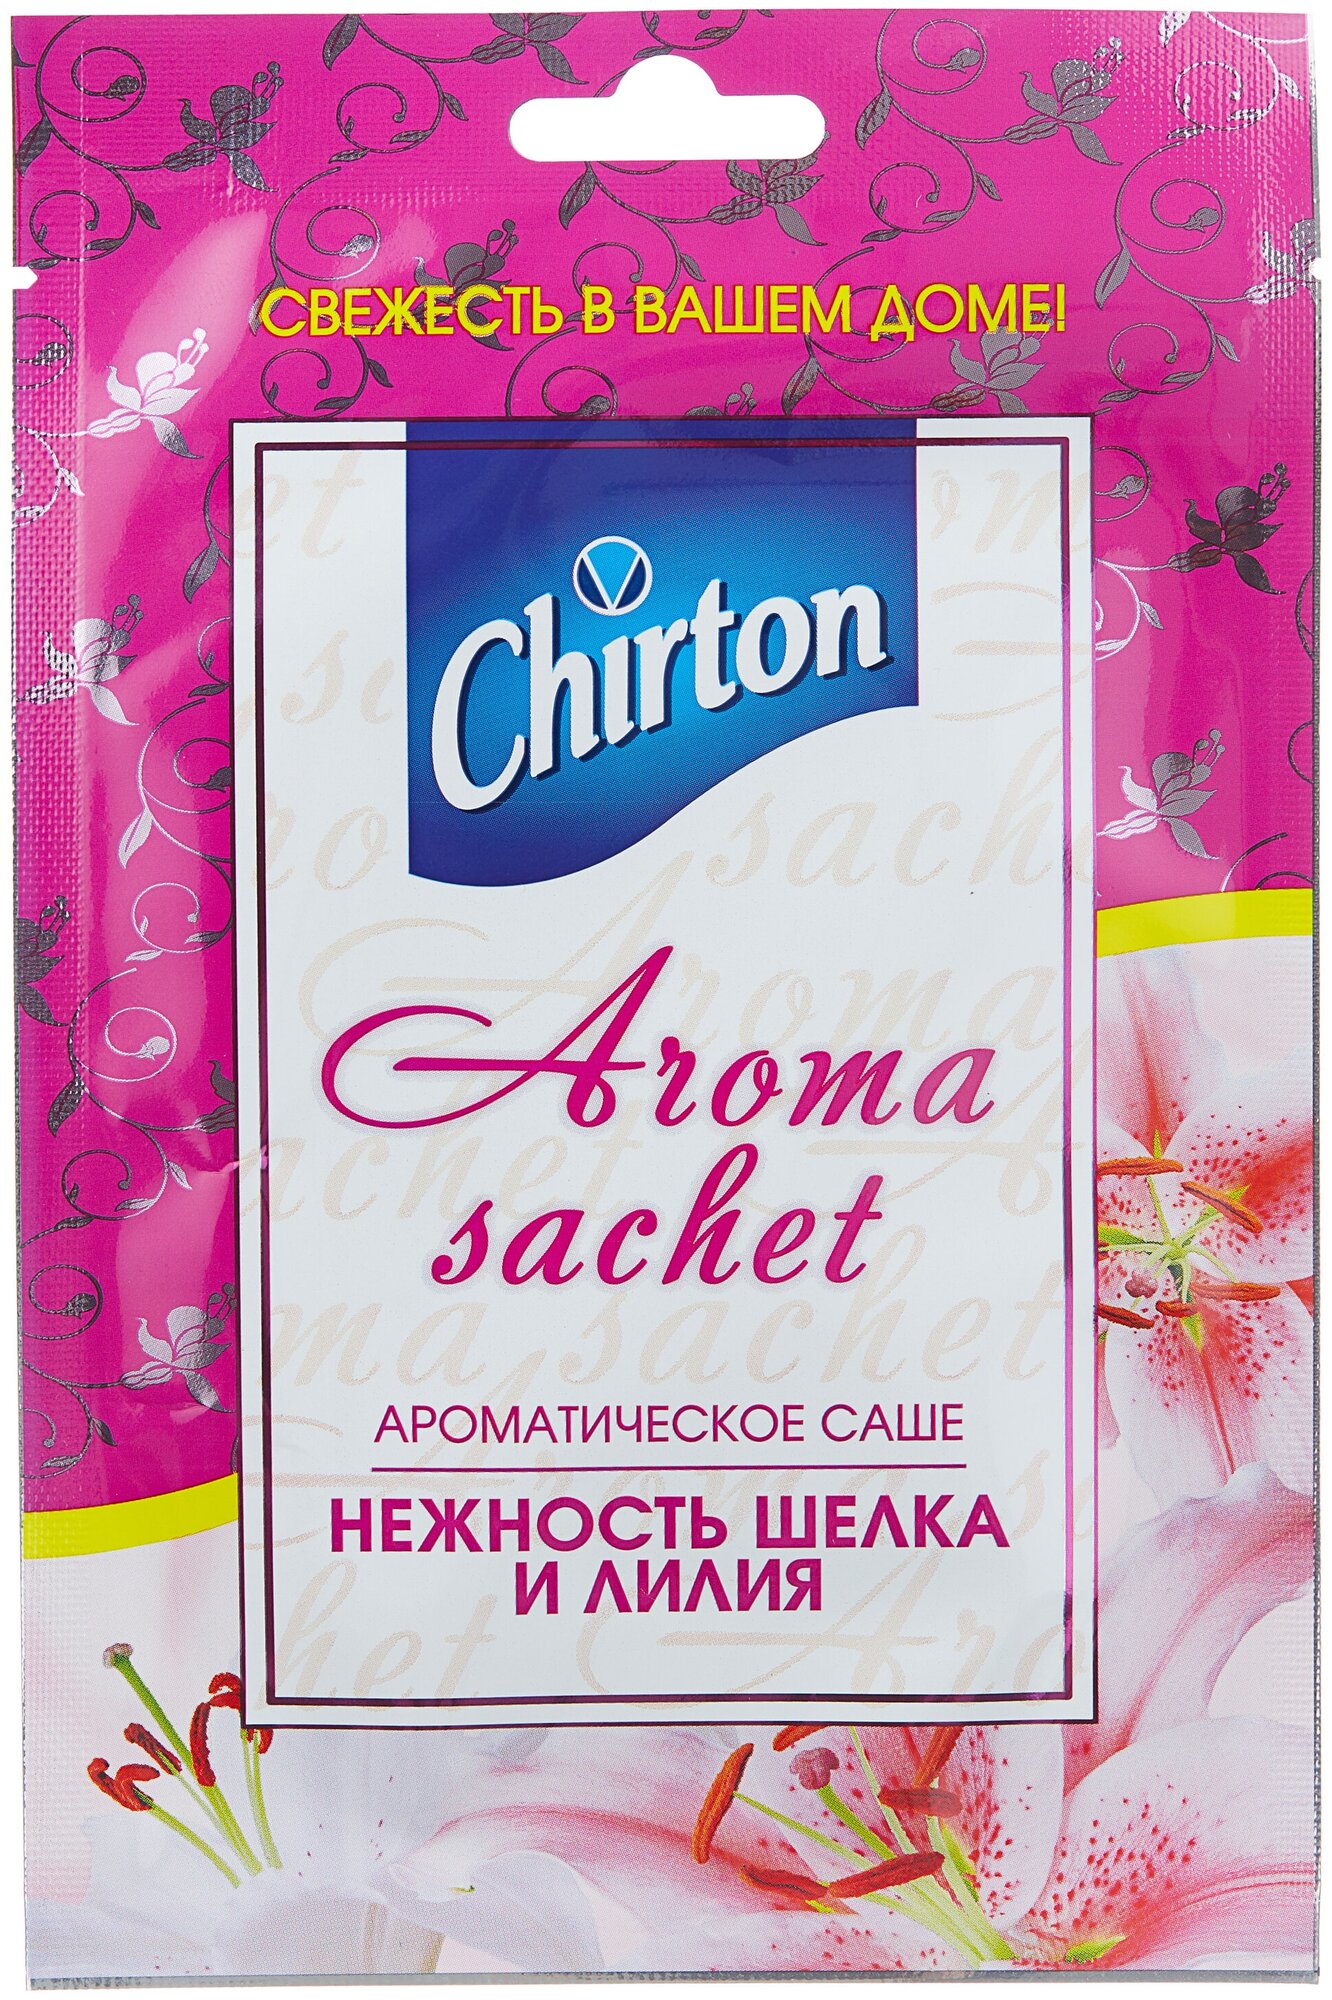 Chirton саше Нежность шёлка и лилия, 15 гр 1 шт.